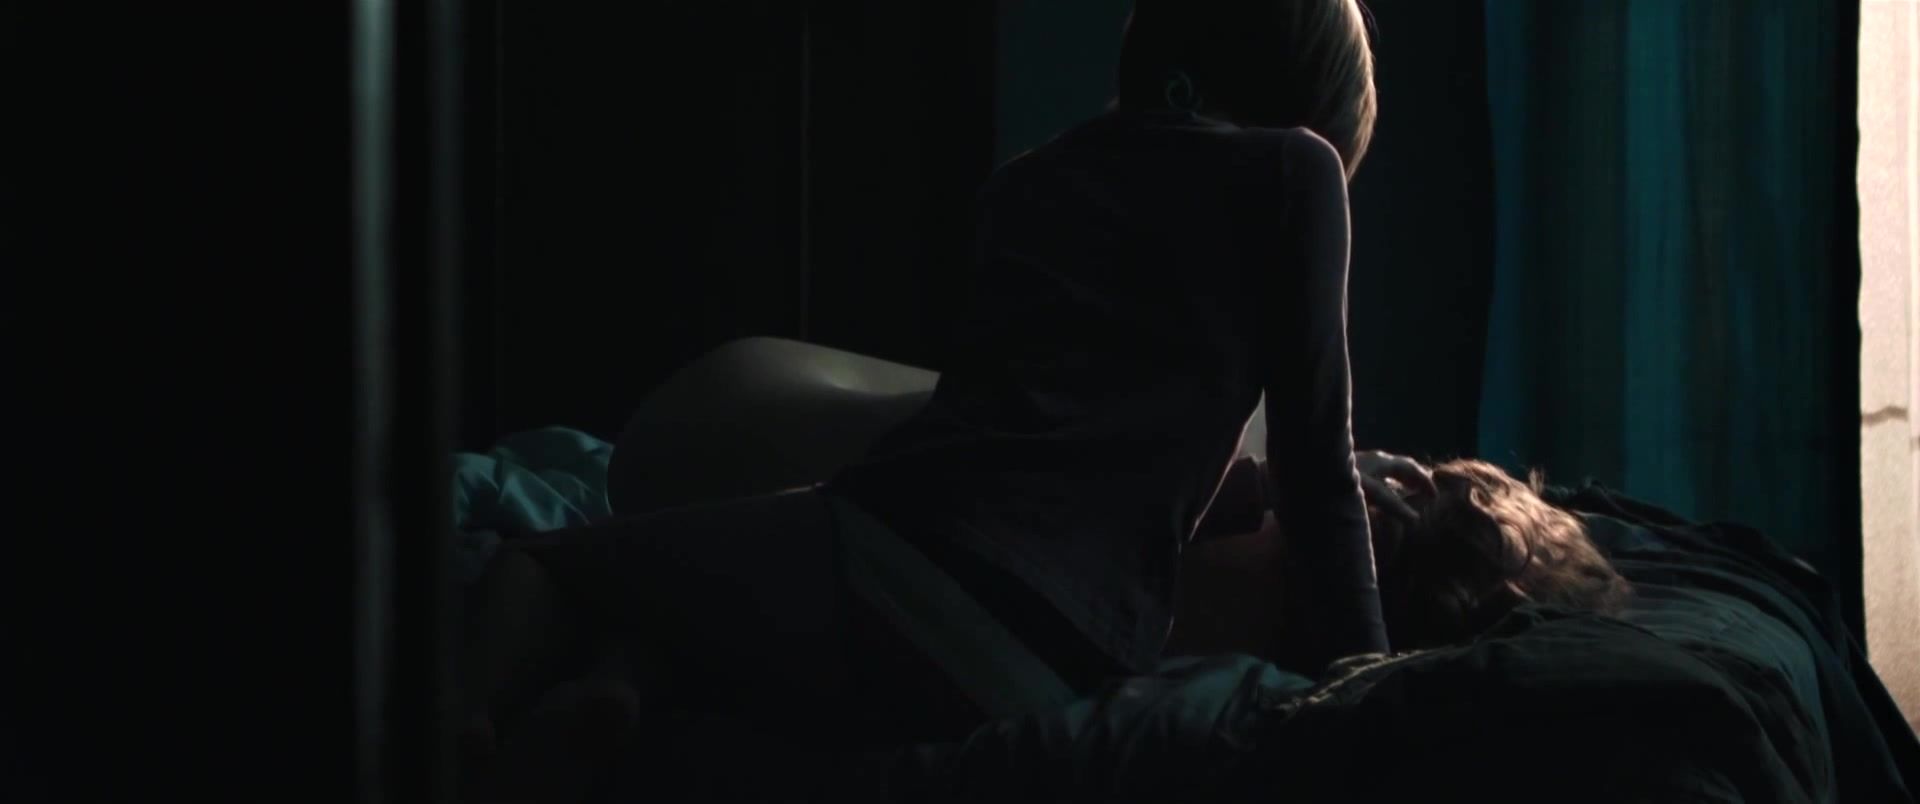 Sextoys Sex video Leeanna Walsman Nude - Dawn (2015) Pack